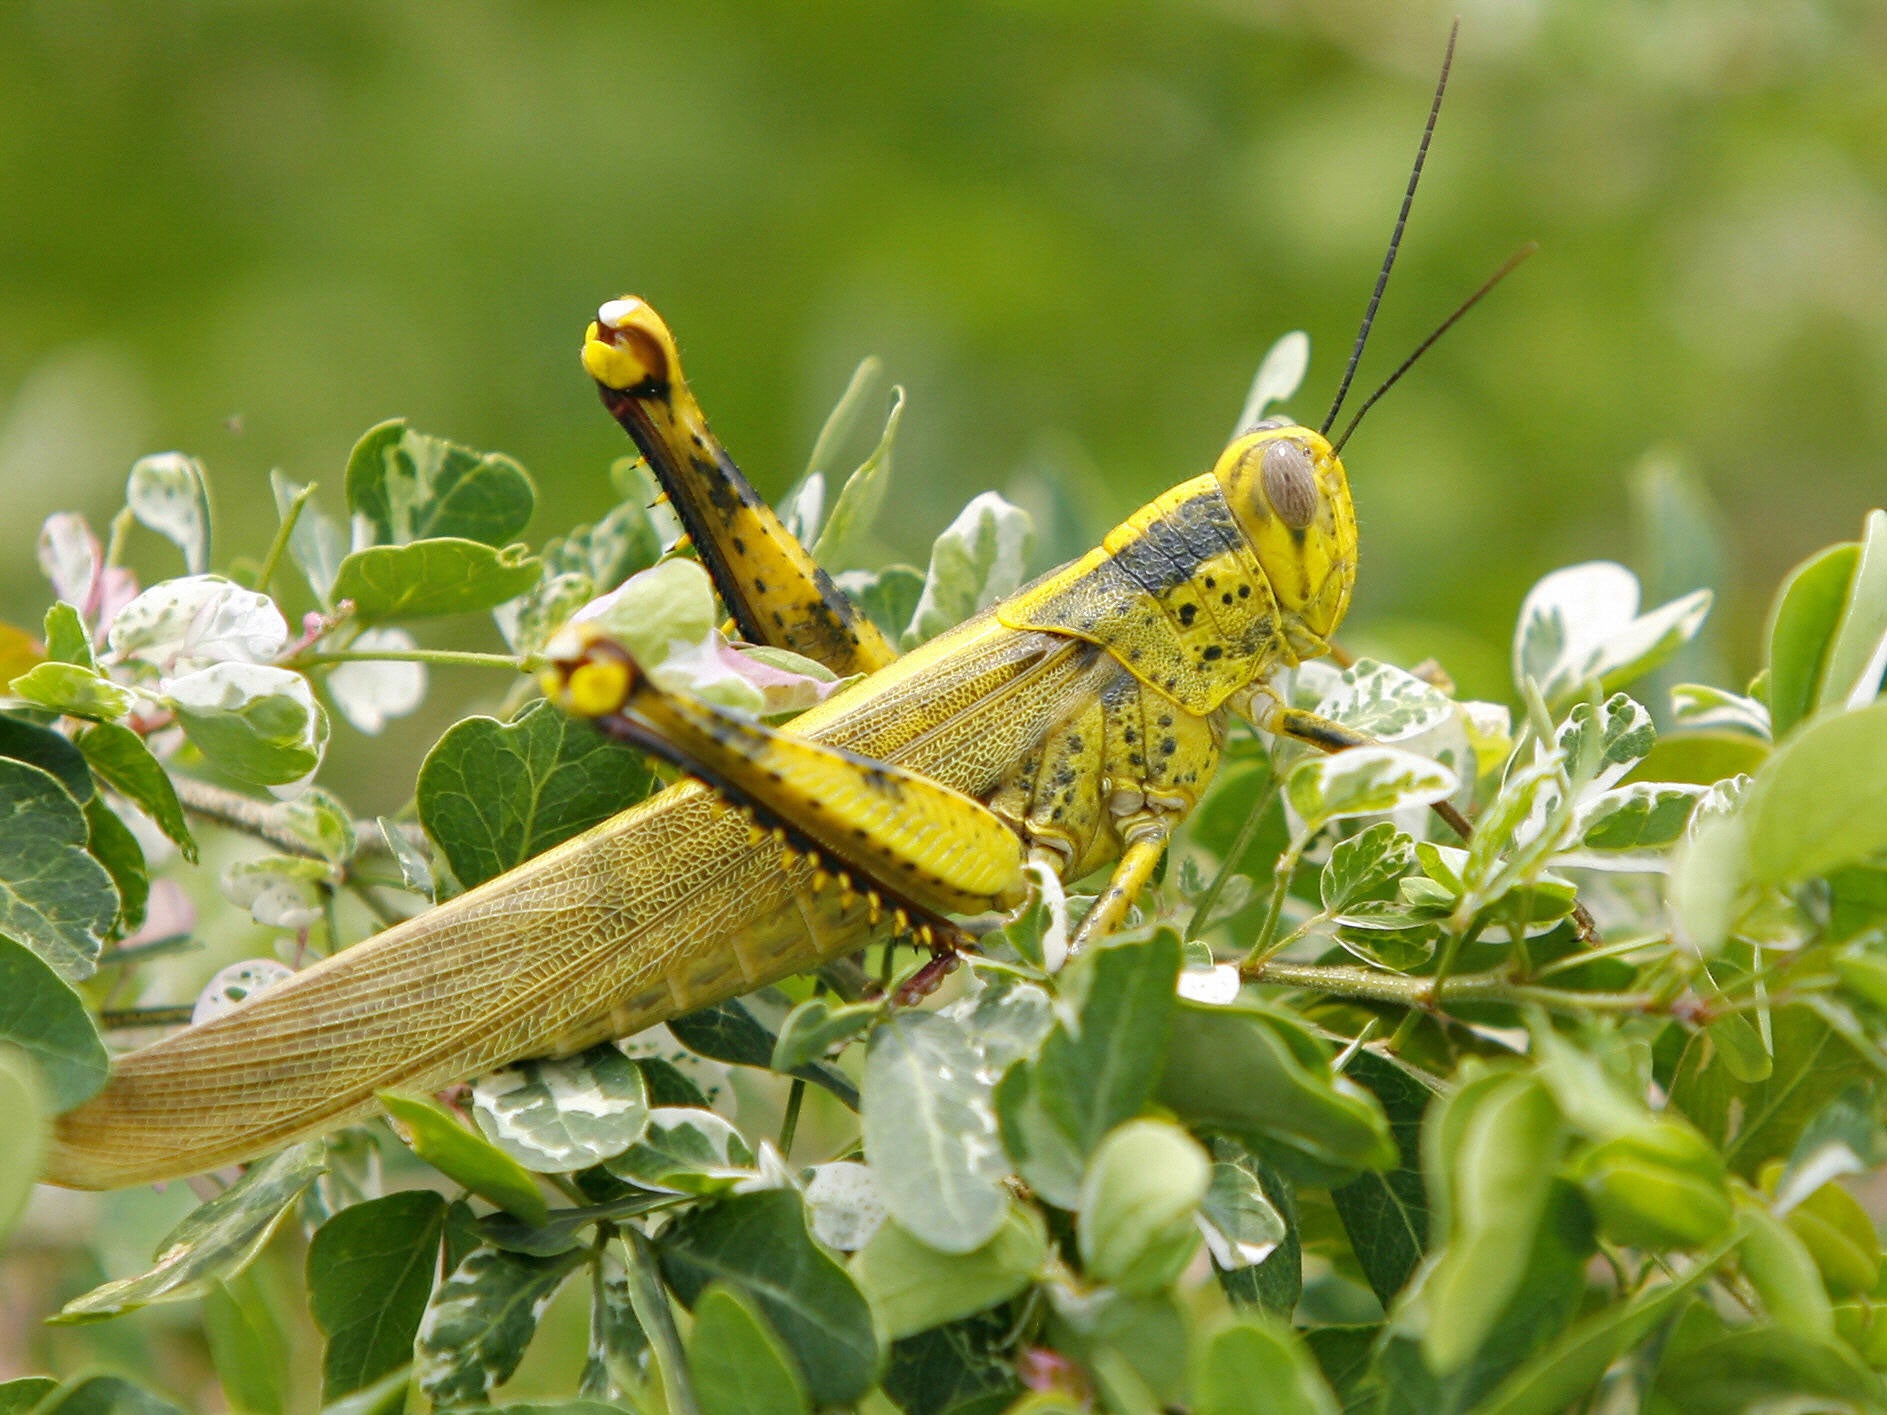 Locusts often feast on crops in southern Russia